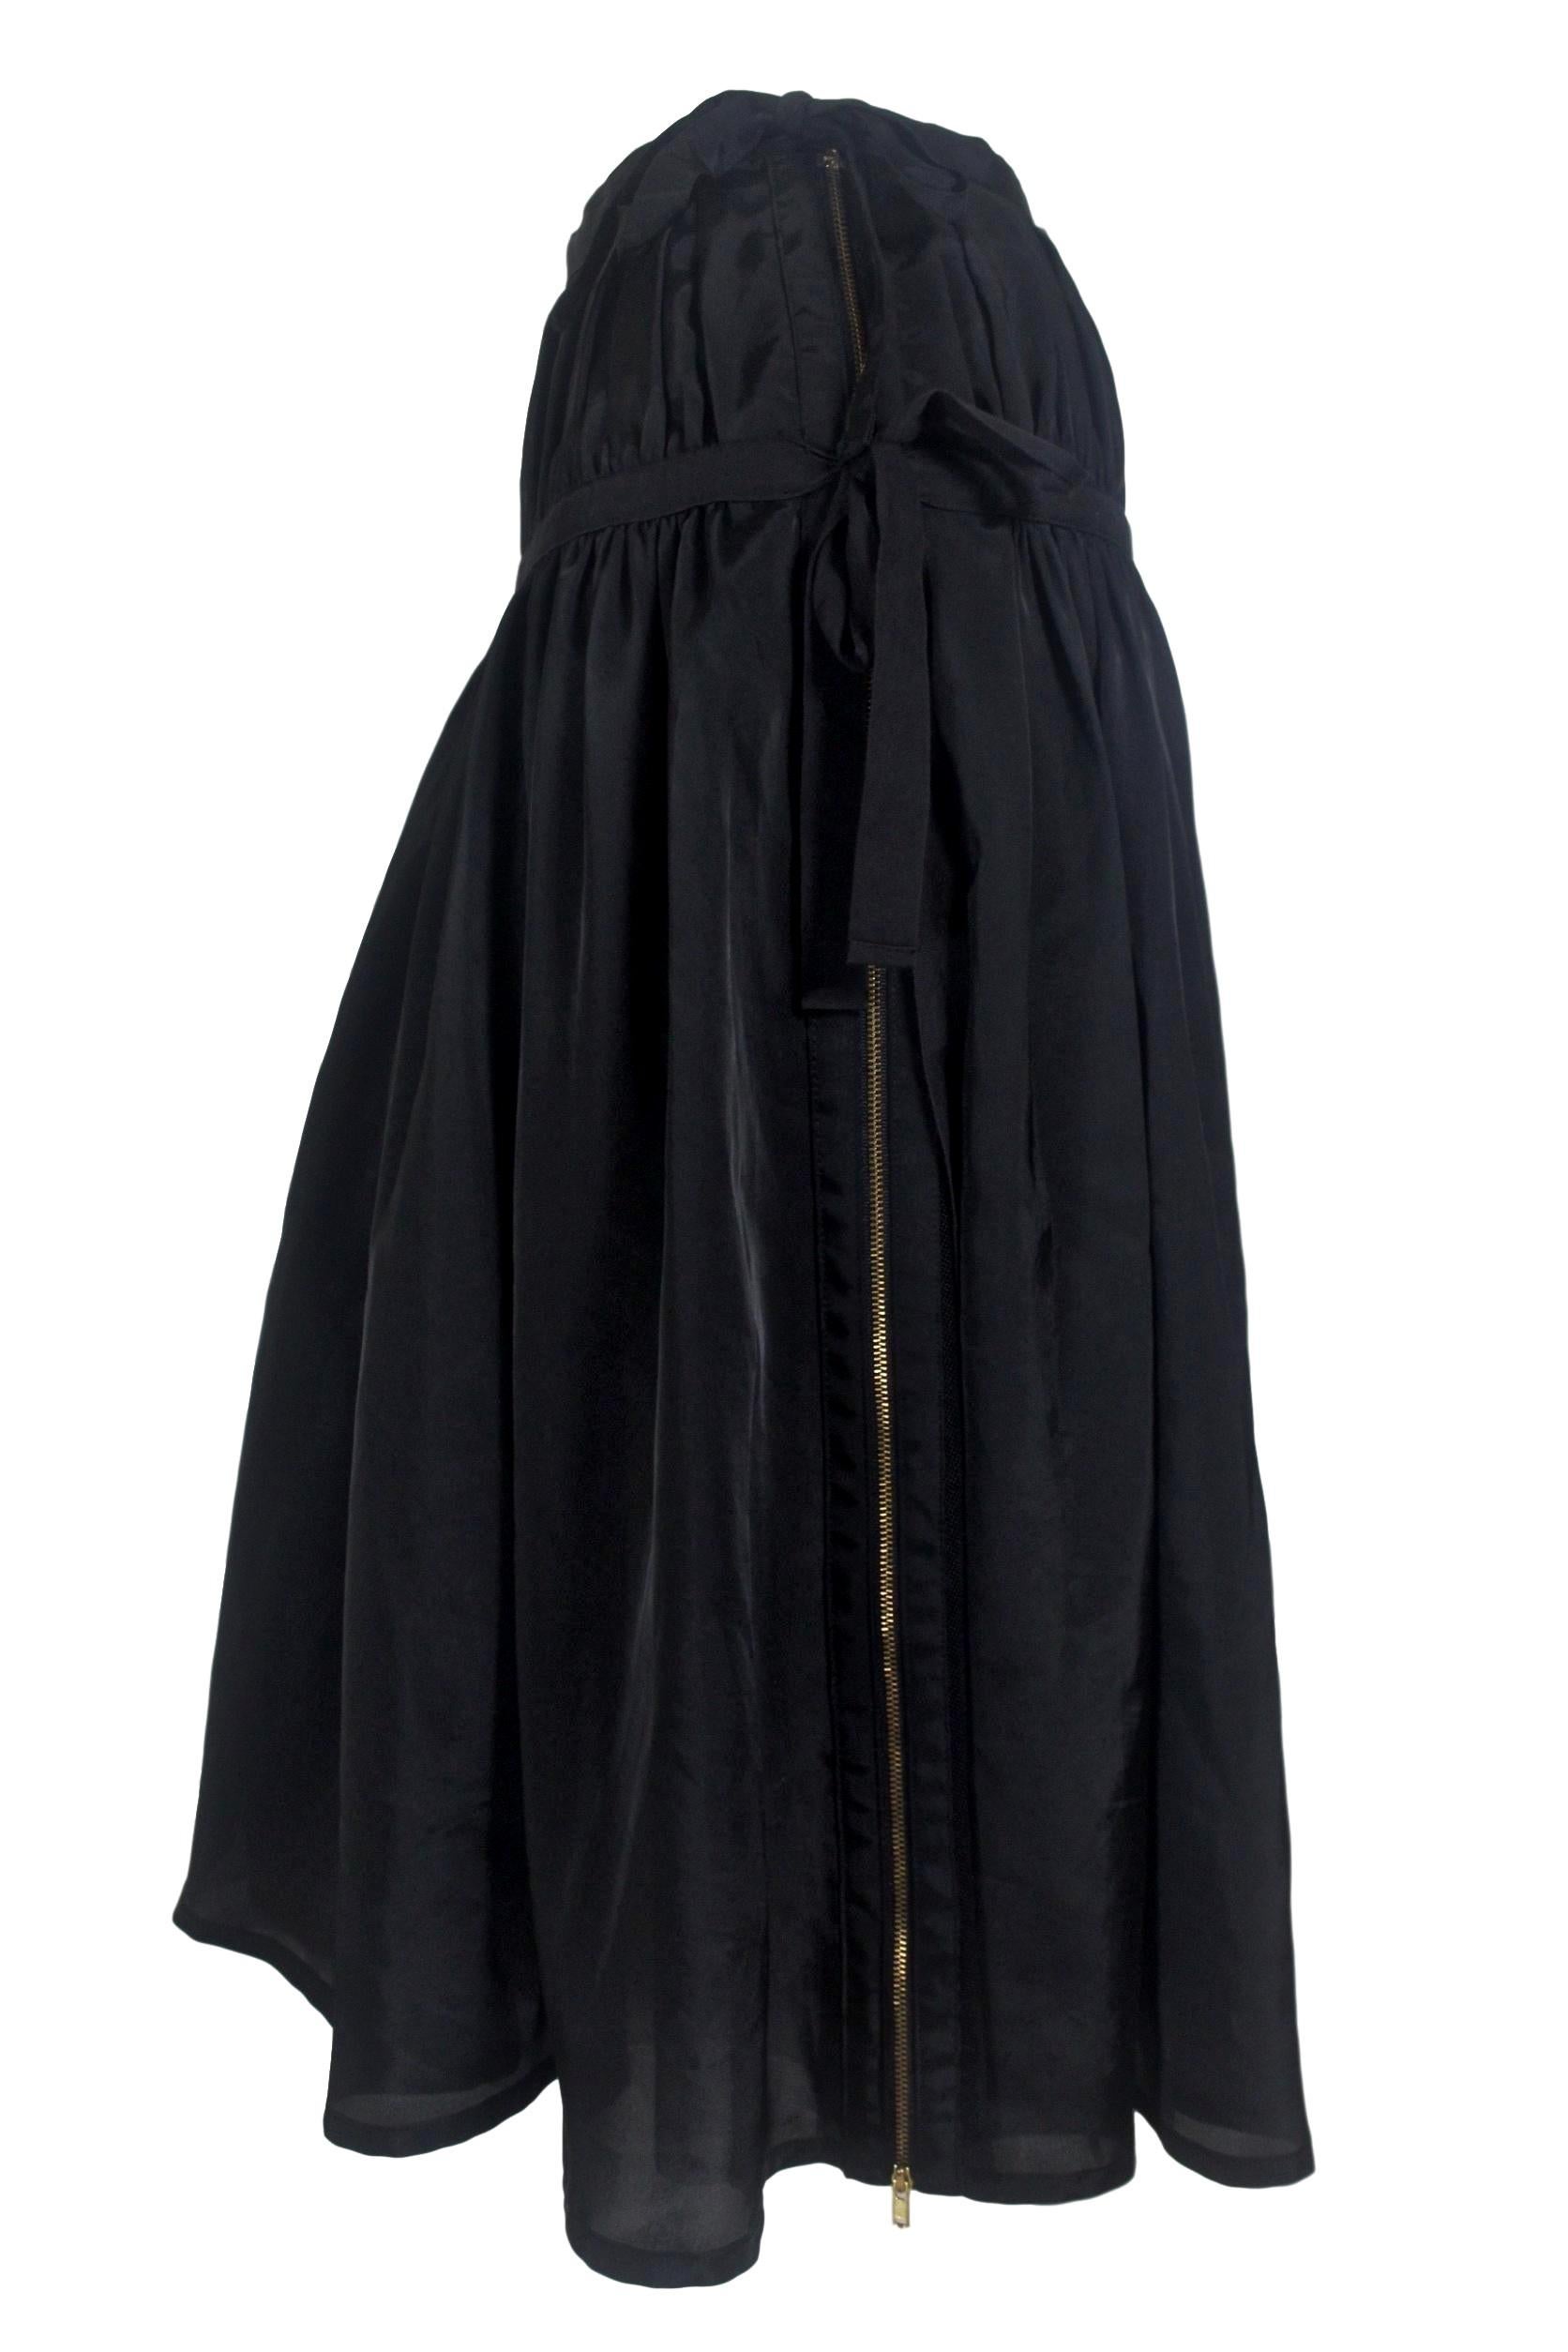 Comme des Garcons Tricot Double Layer Wrap Skirt 2007 For Sale 9